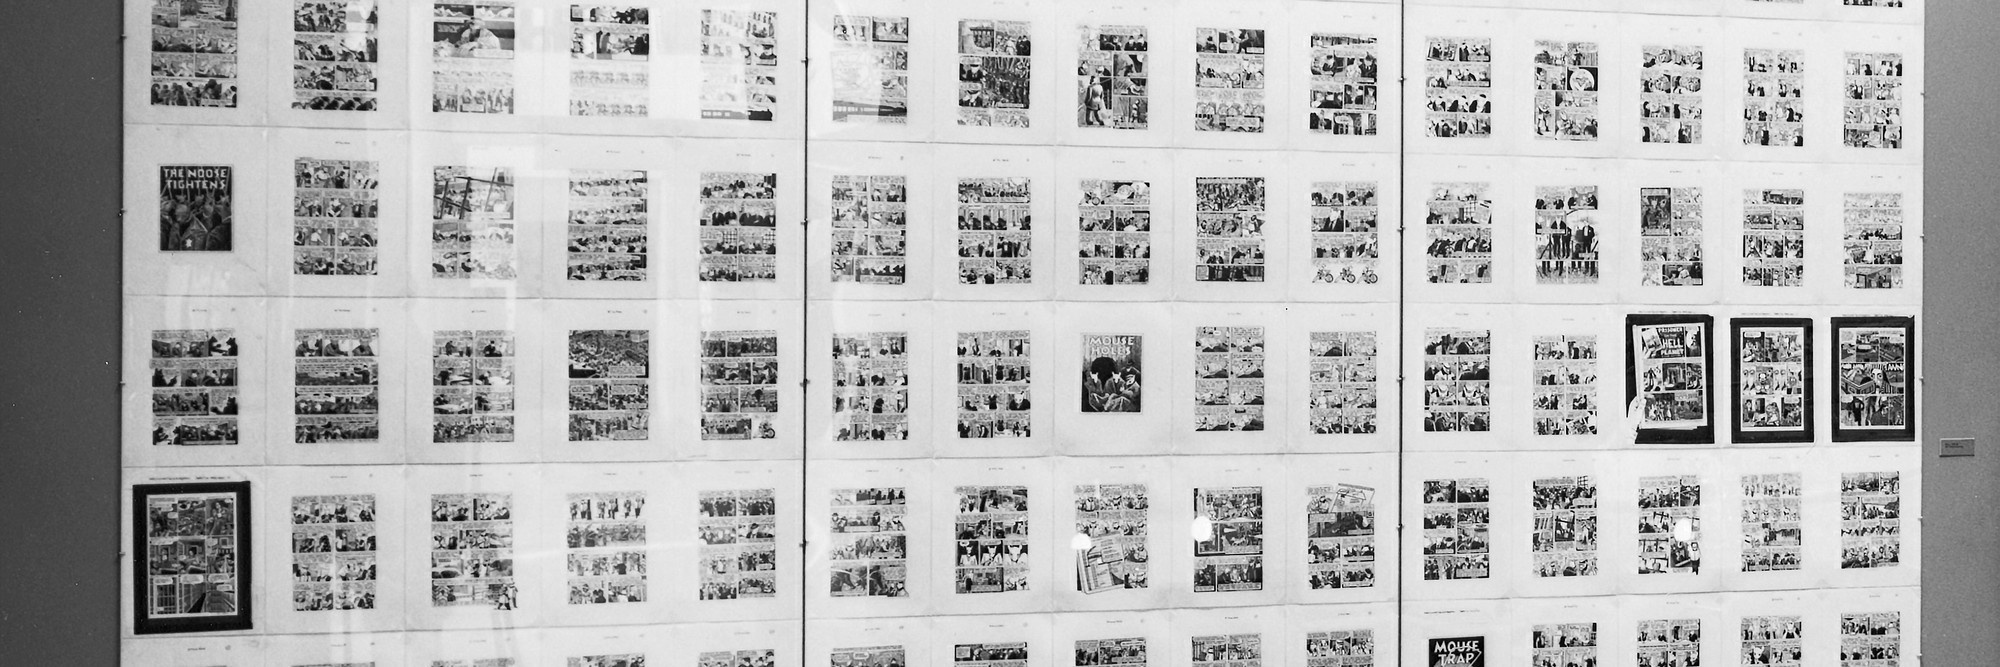 Installation view of Projects 32: Art Spiegelman at The Museum of Modern Art, New York. Photo: Mali Olatunji